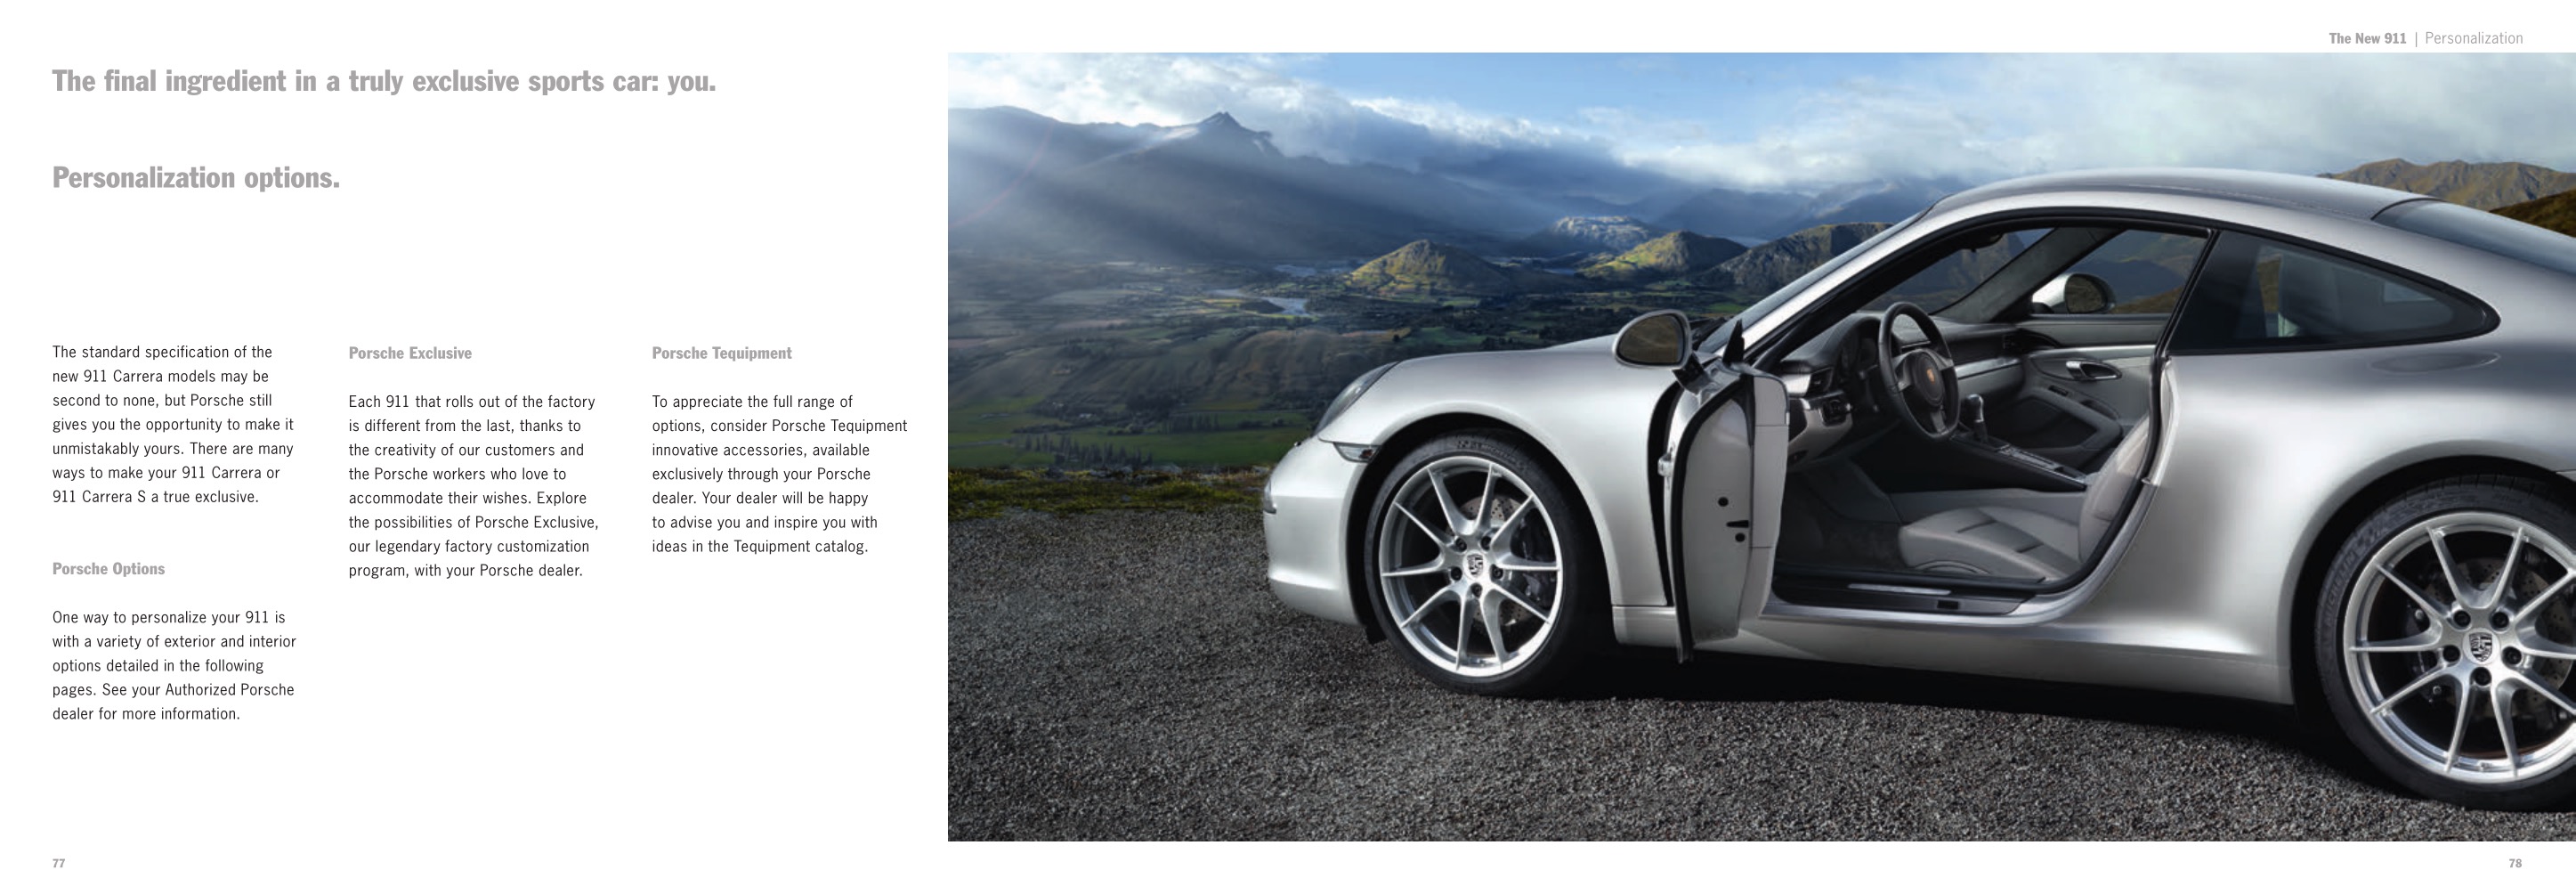 2012 Porsche 911 991 Brochure Page 43